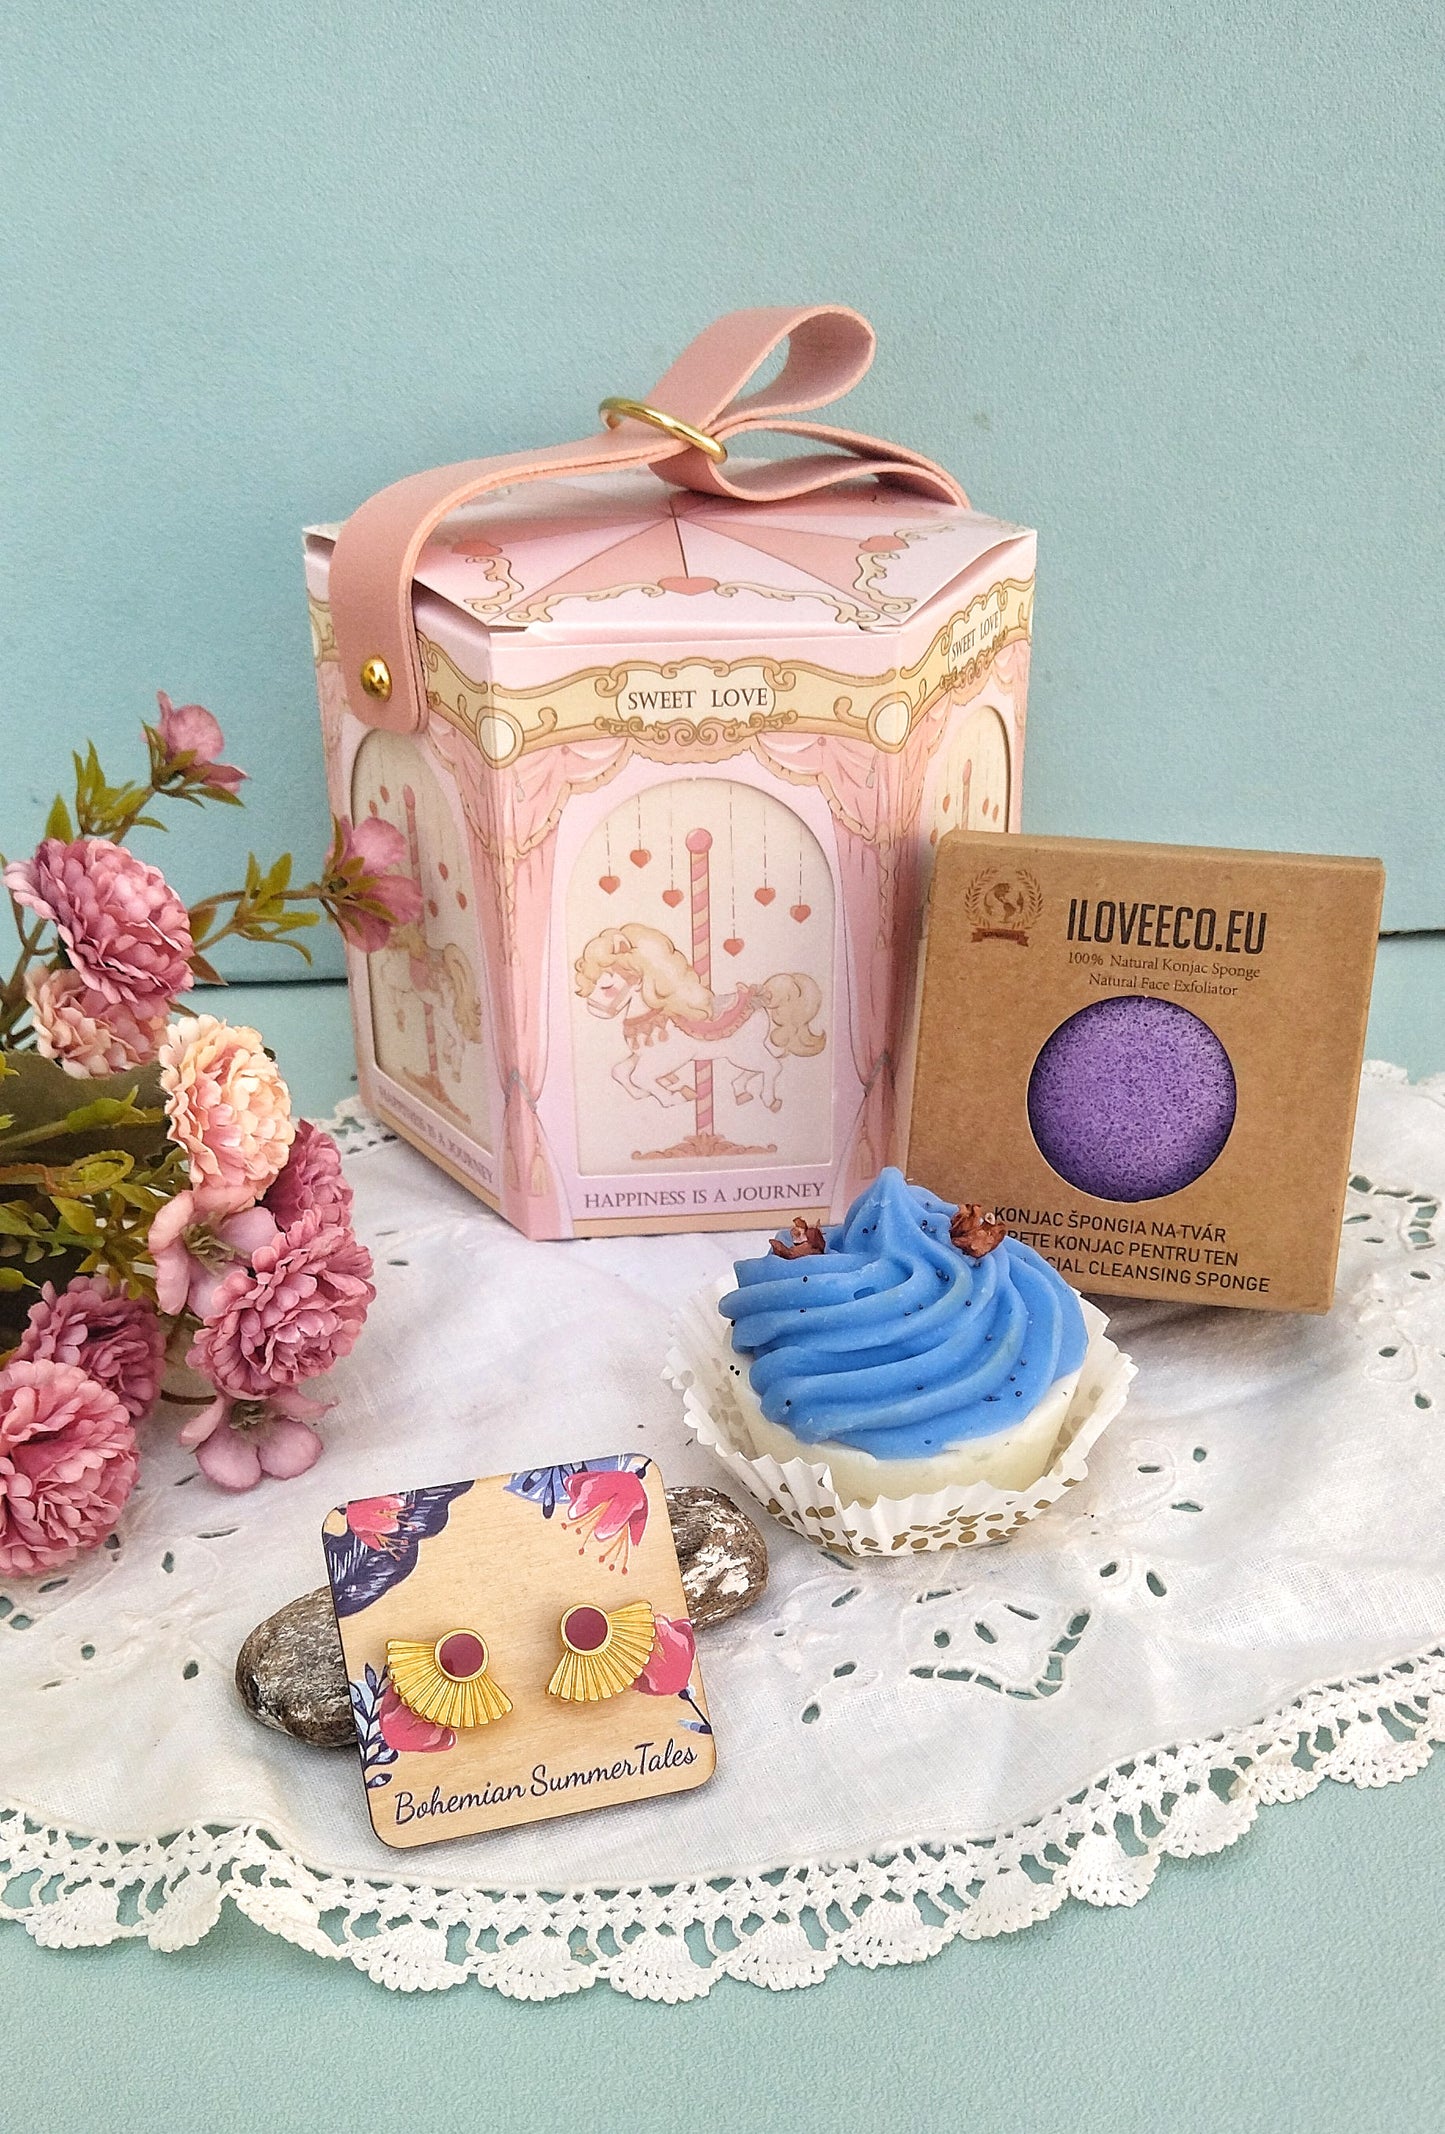 Care Package For Her, Carousel Gift Box With Vegan Handmade Cupcake Soap/Biodegradable Lavender Sponge And Enamel Stud Earrings